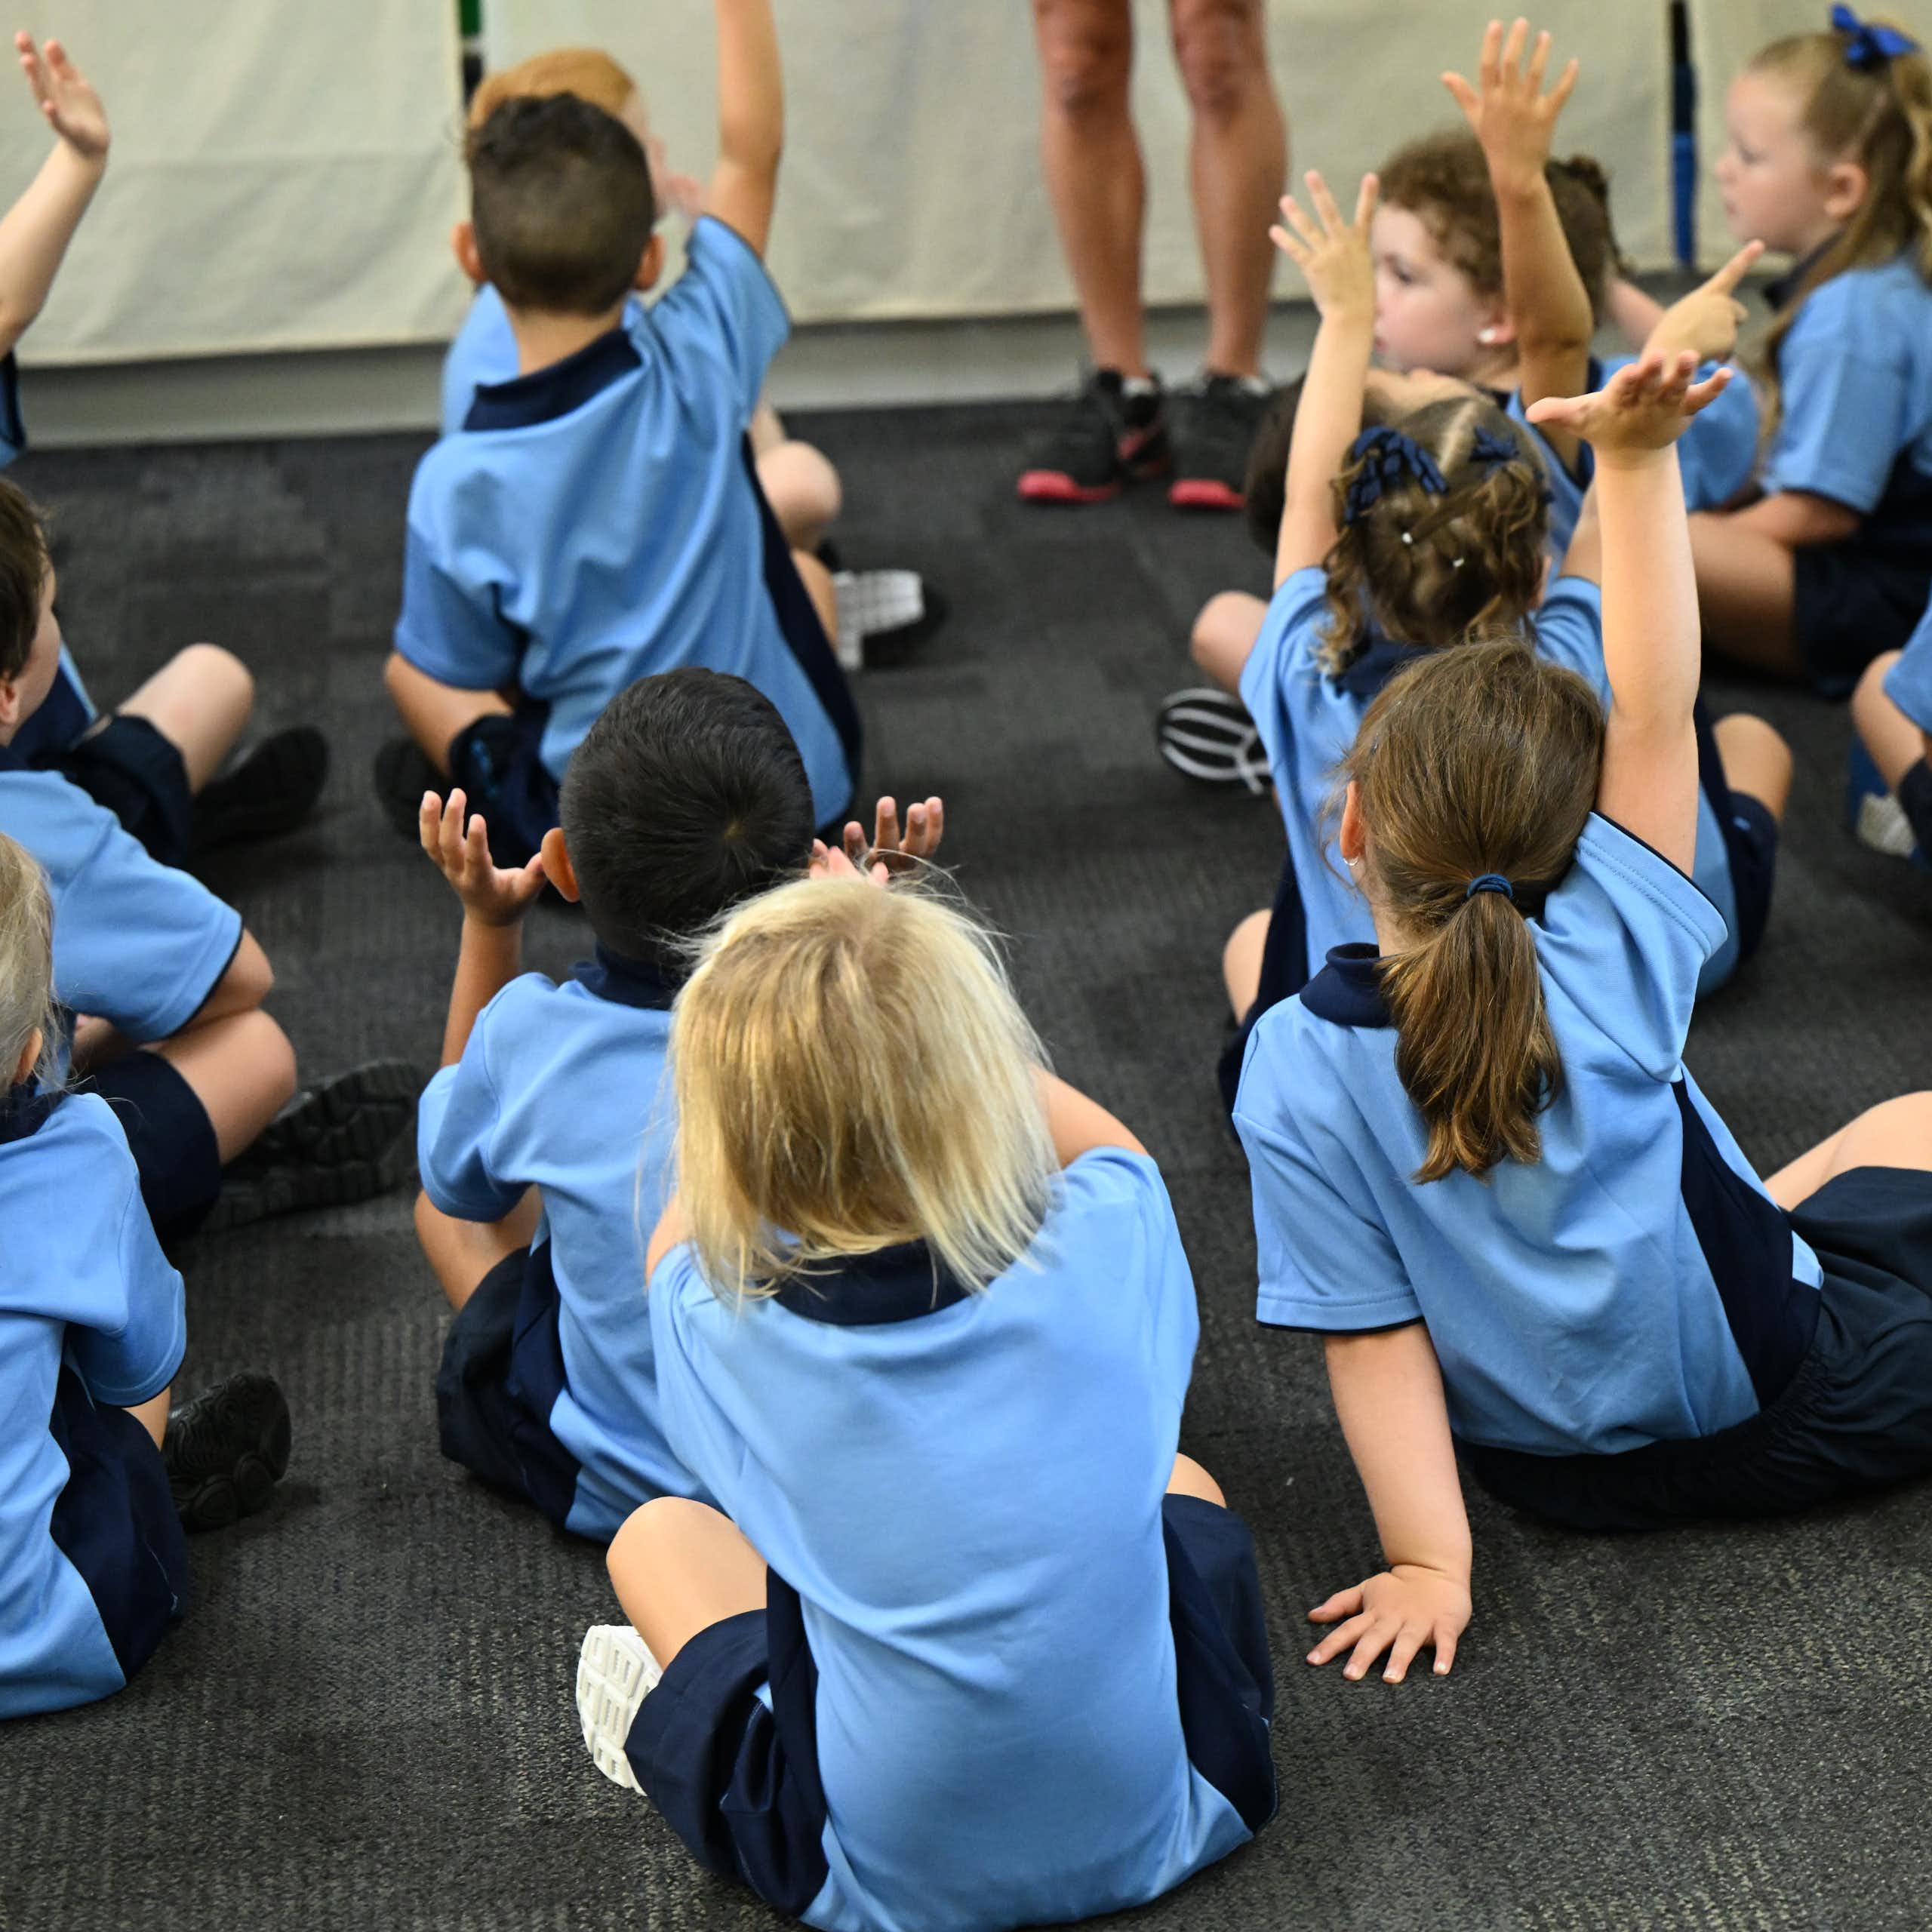 Children in school uniforms raise their hands while sitting on the floor. 